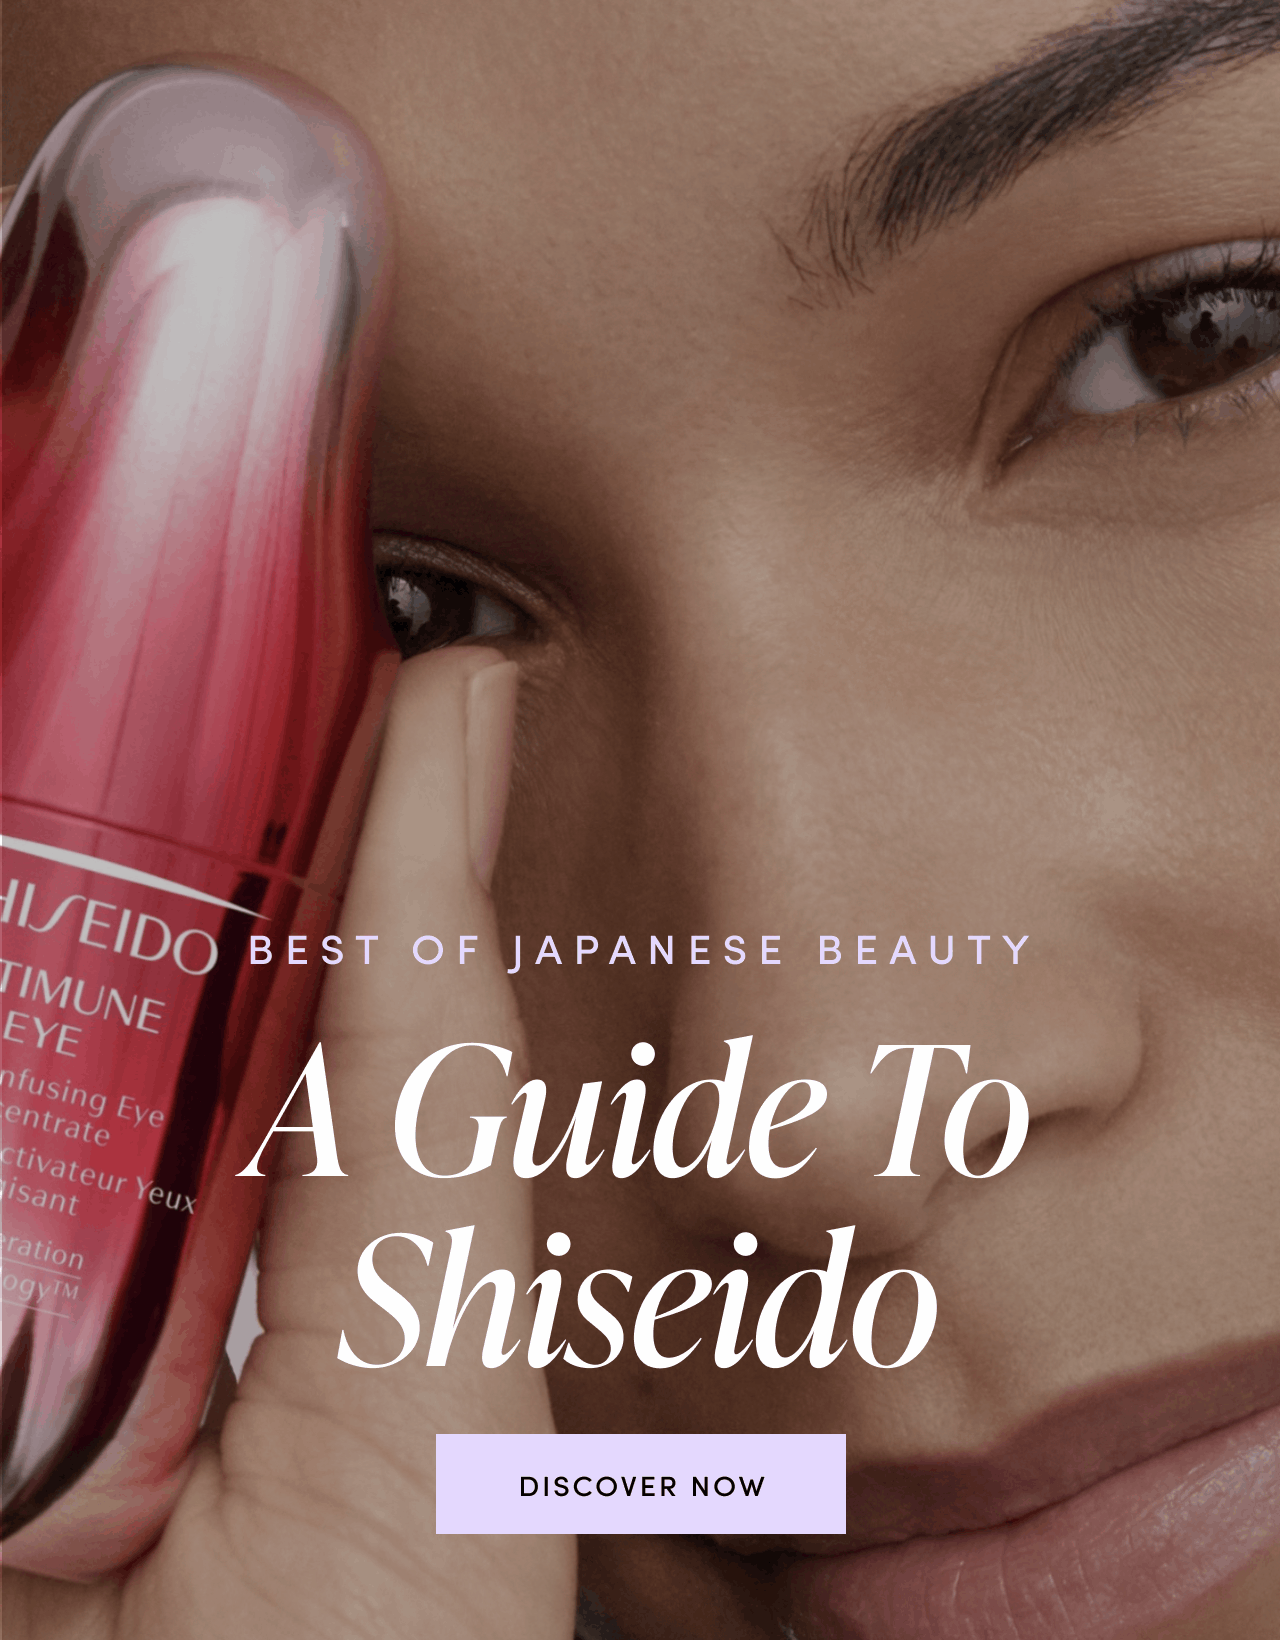 A Guide To Japanese Beauty: Shiseido 🌸 - Fresh Beauty Co.